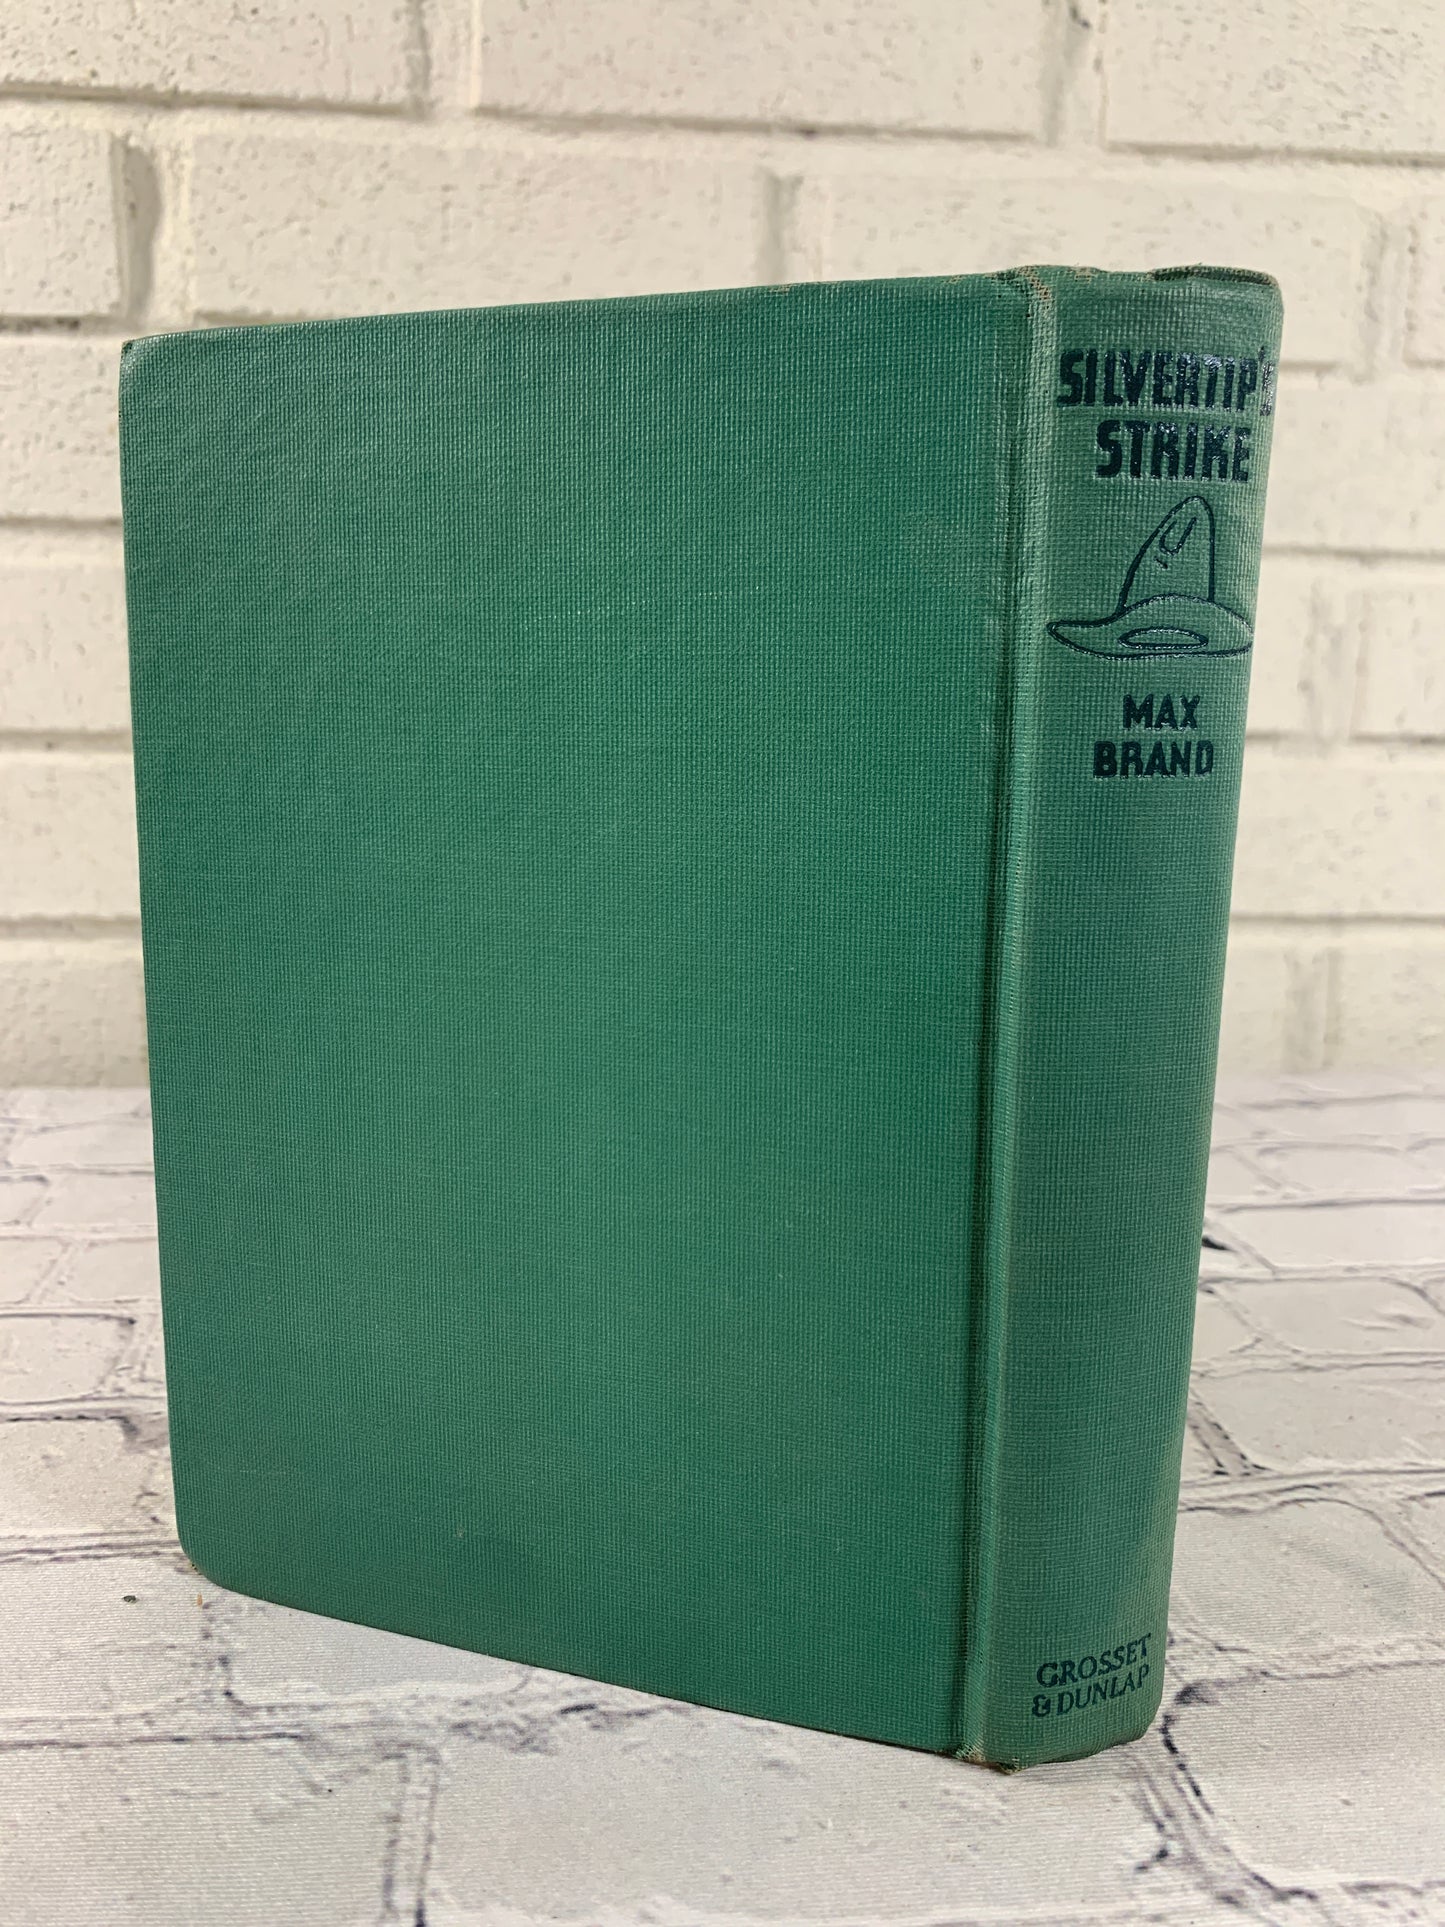 Silvertip's Strike by Max Brand [1942]